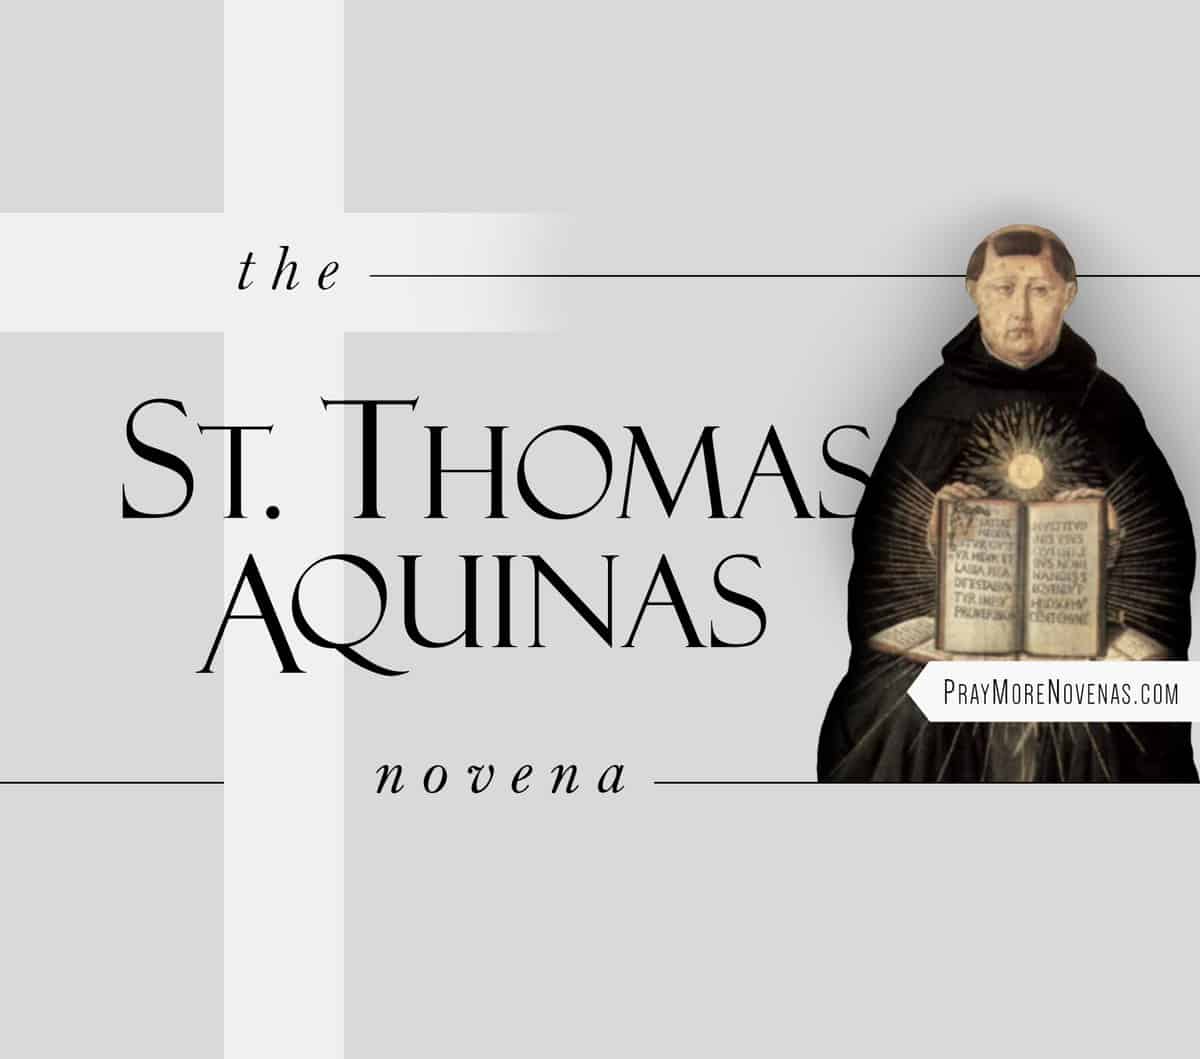 A Prayer Before Mass (by St. Thomas Aquinas)